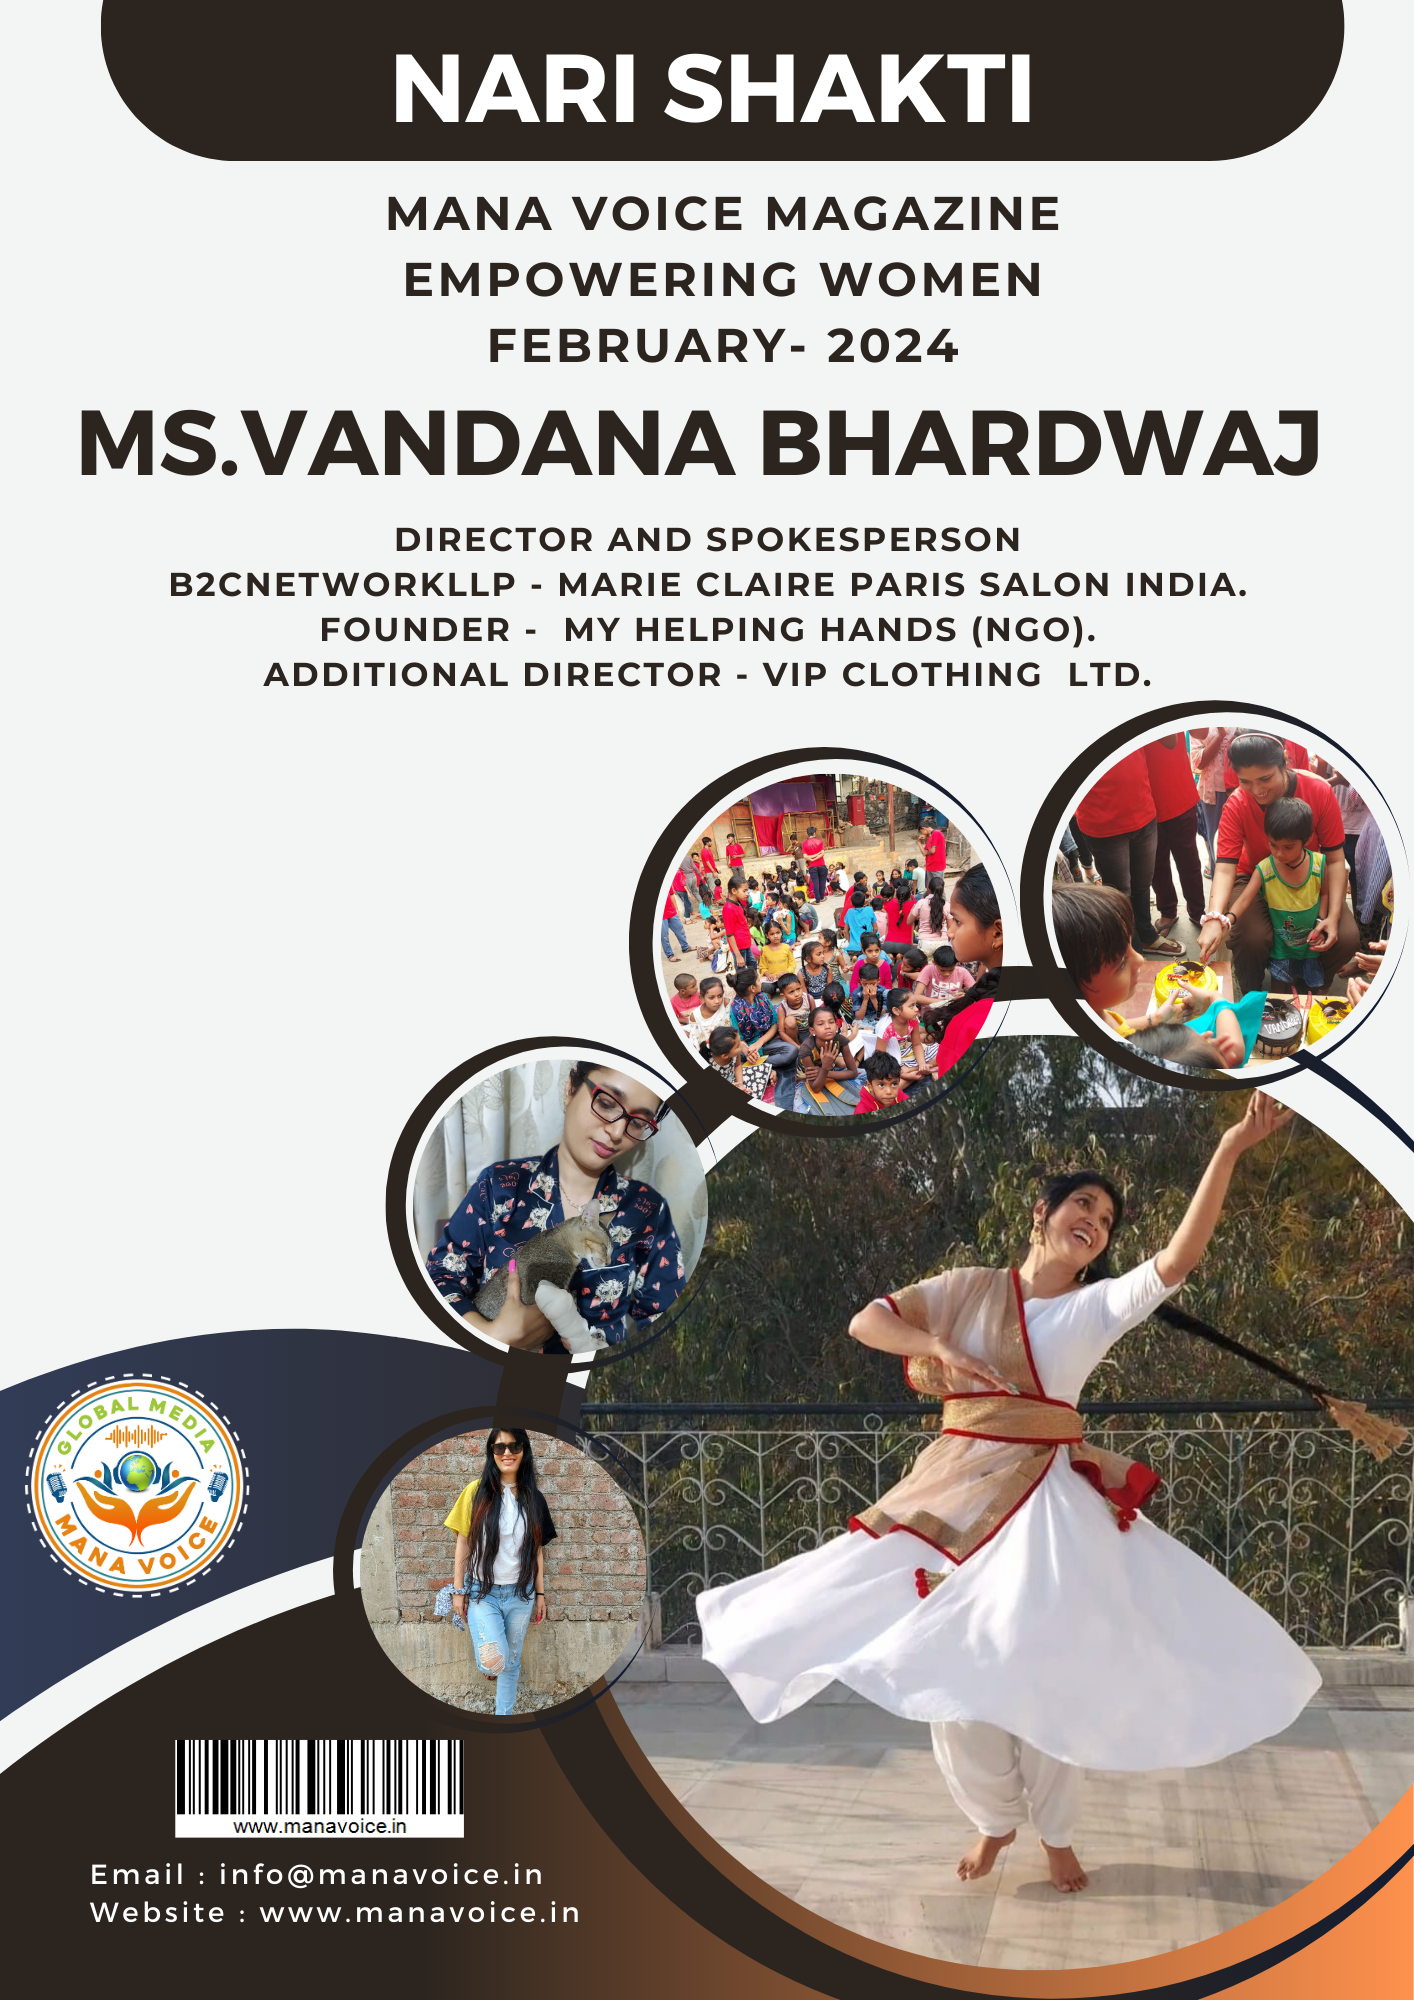 Sparkle with Purpose: Dr. Vandana Bhardwaj's Inspiring Journey | Nari Shakti - Empowering Women | Mana Voice